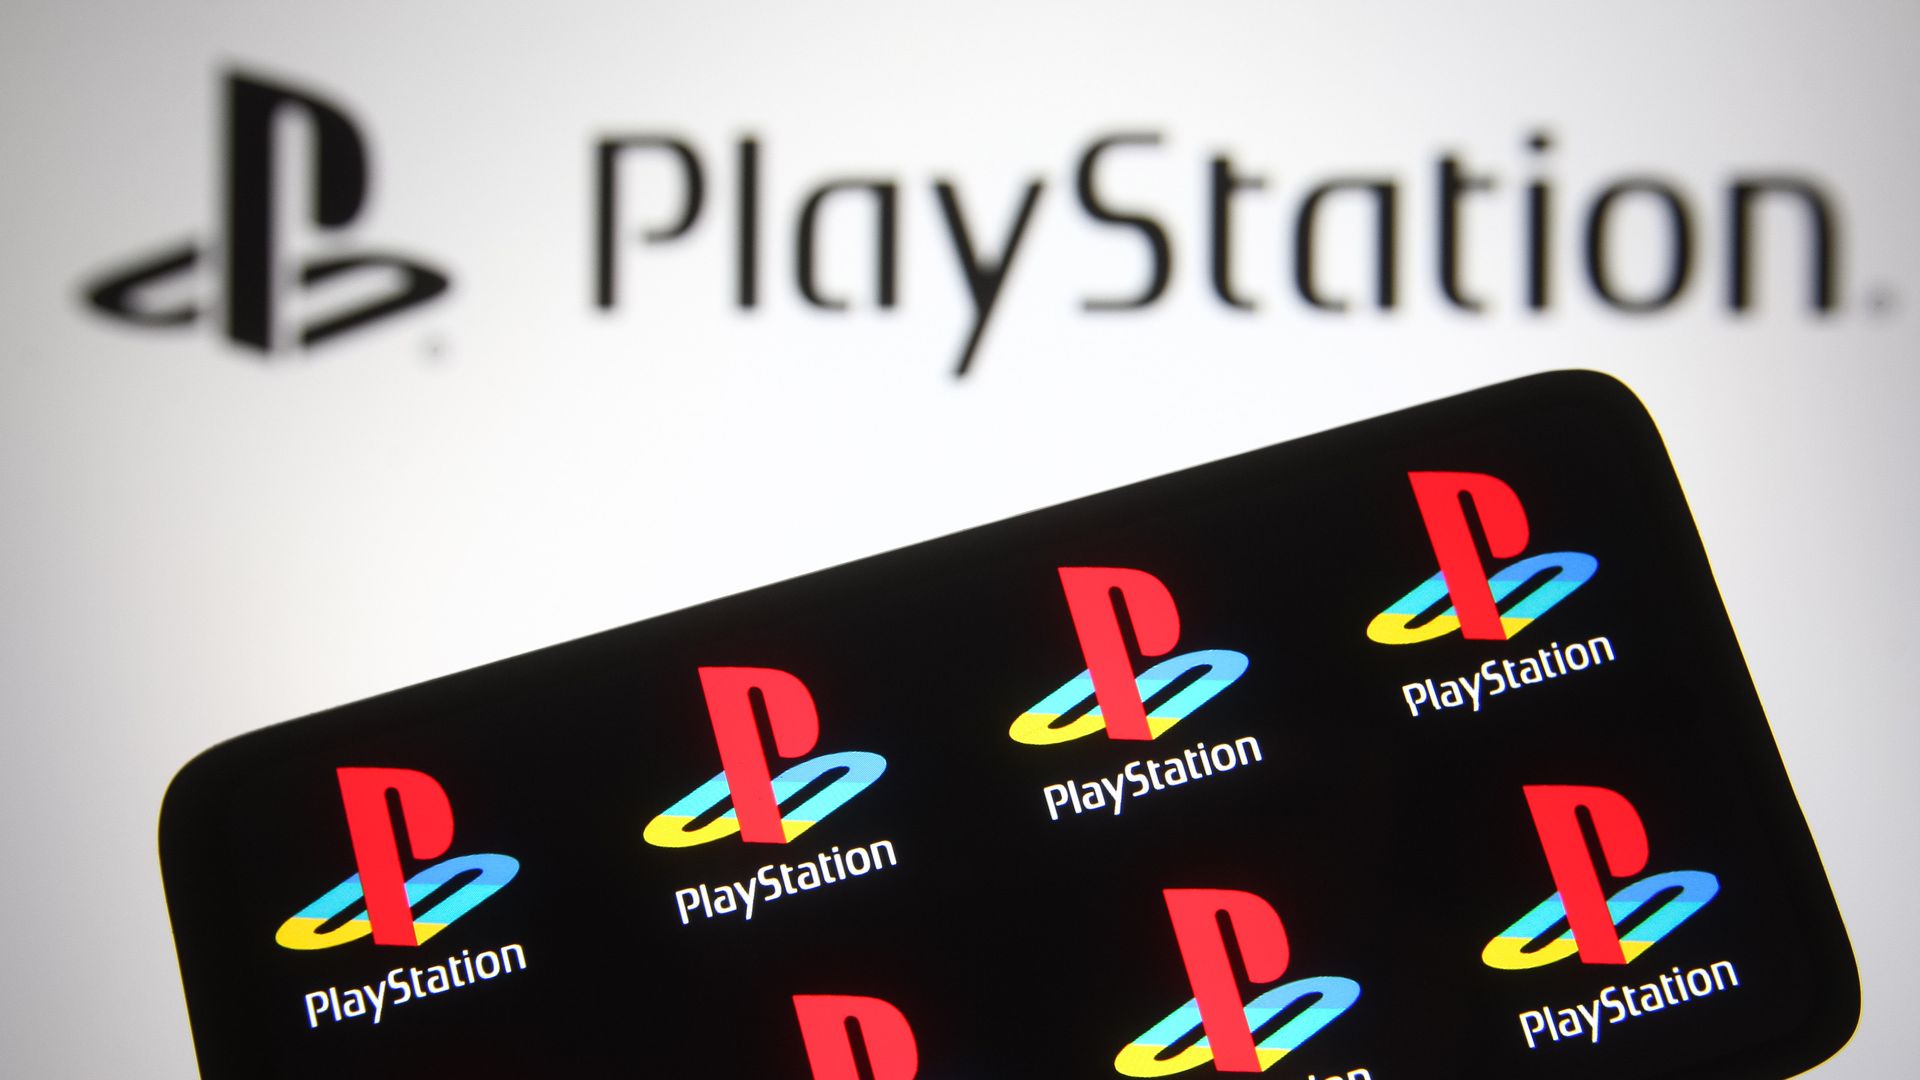 Photo of a screen displaying PlayStation logos